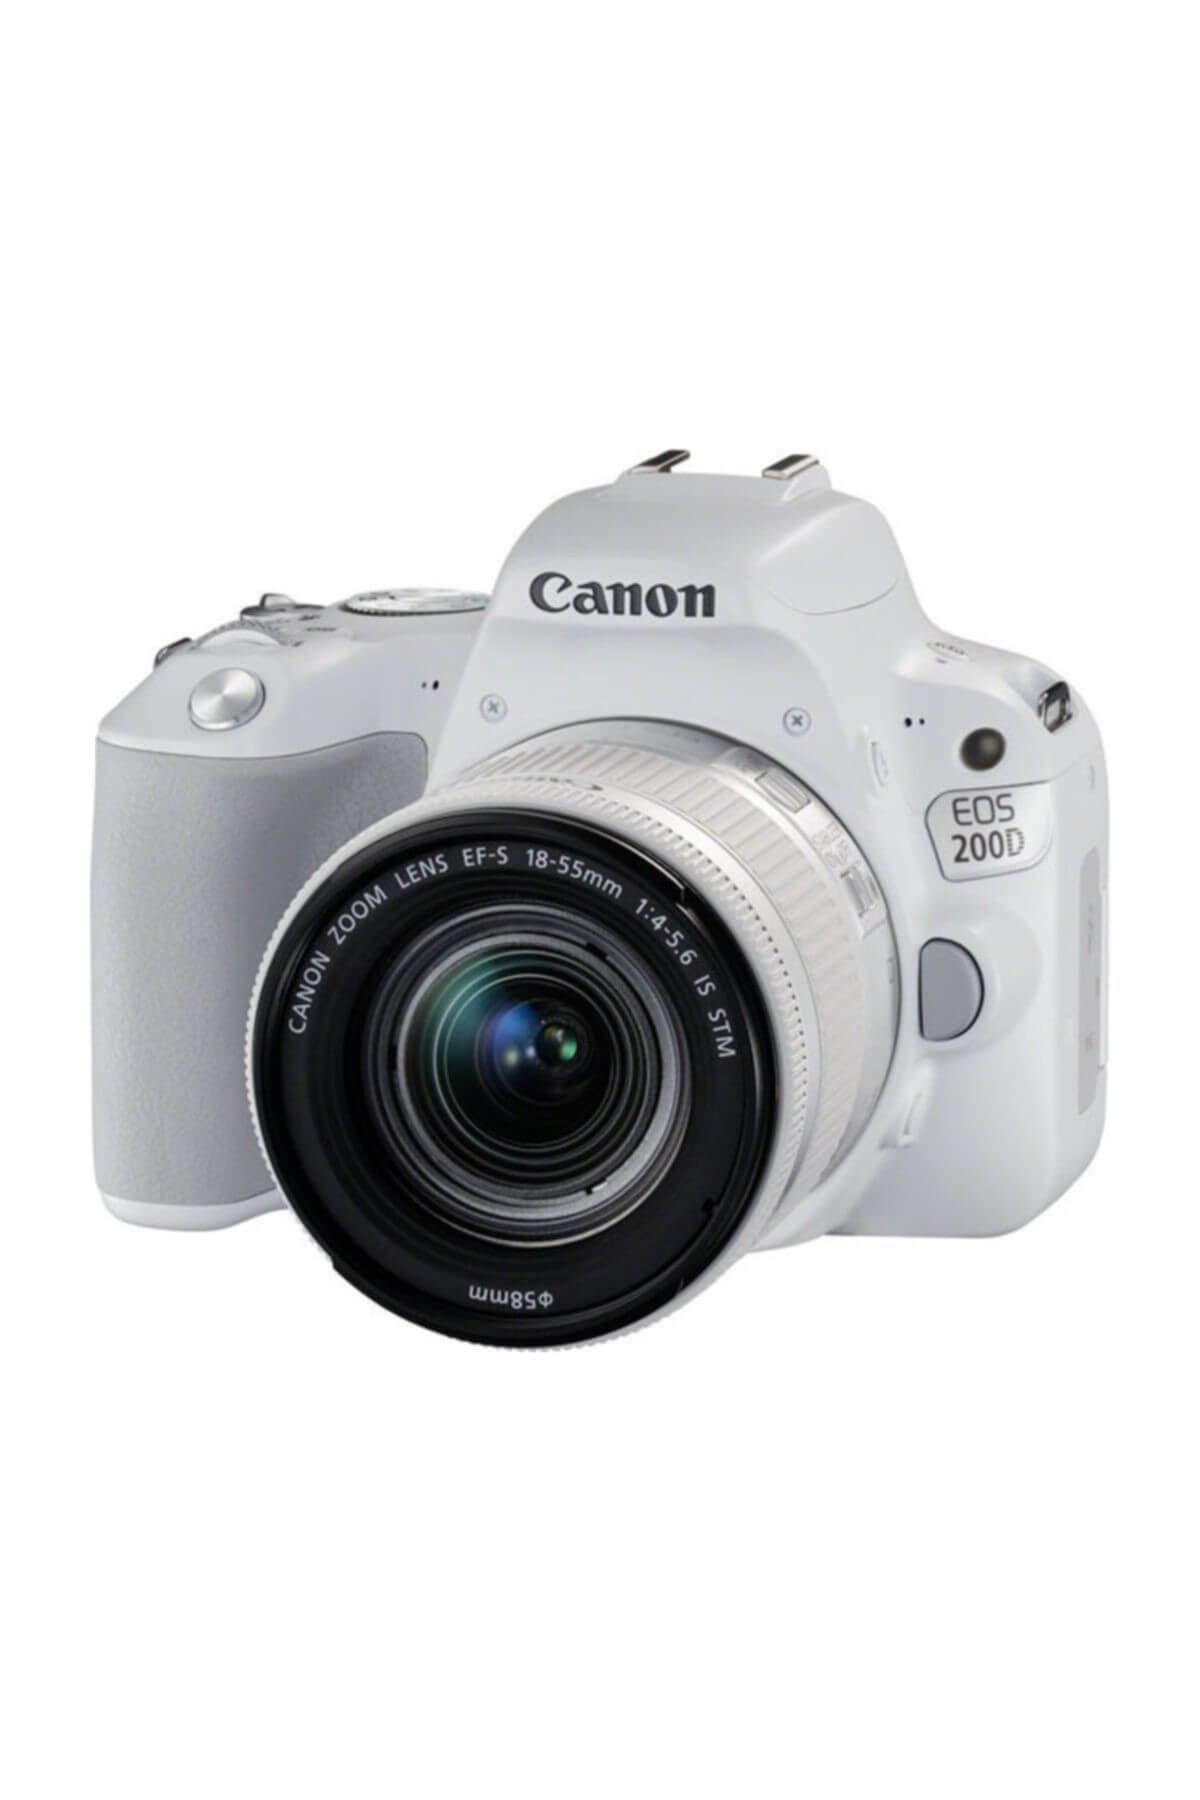 Canon EOS 200D 18-55mm IS STM Fotoğraf Makinesi (Beyaz) (Canon Eurasia Garantili)